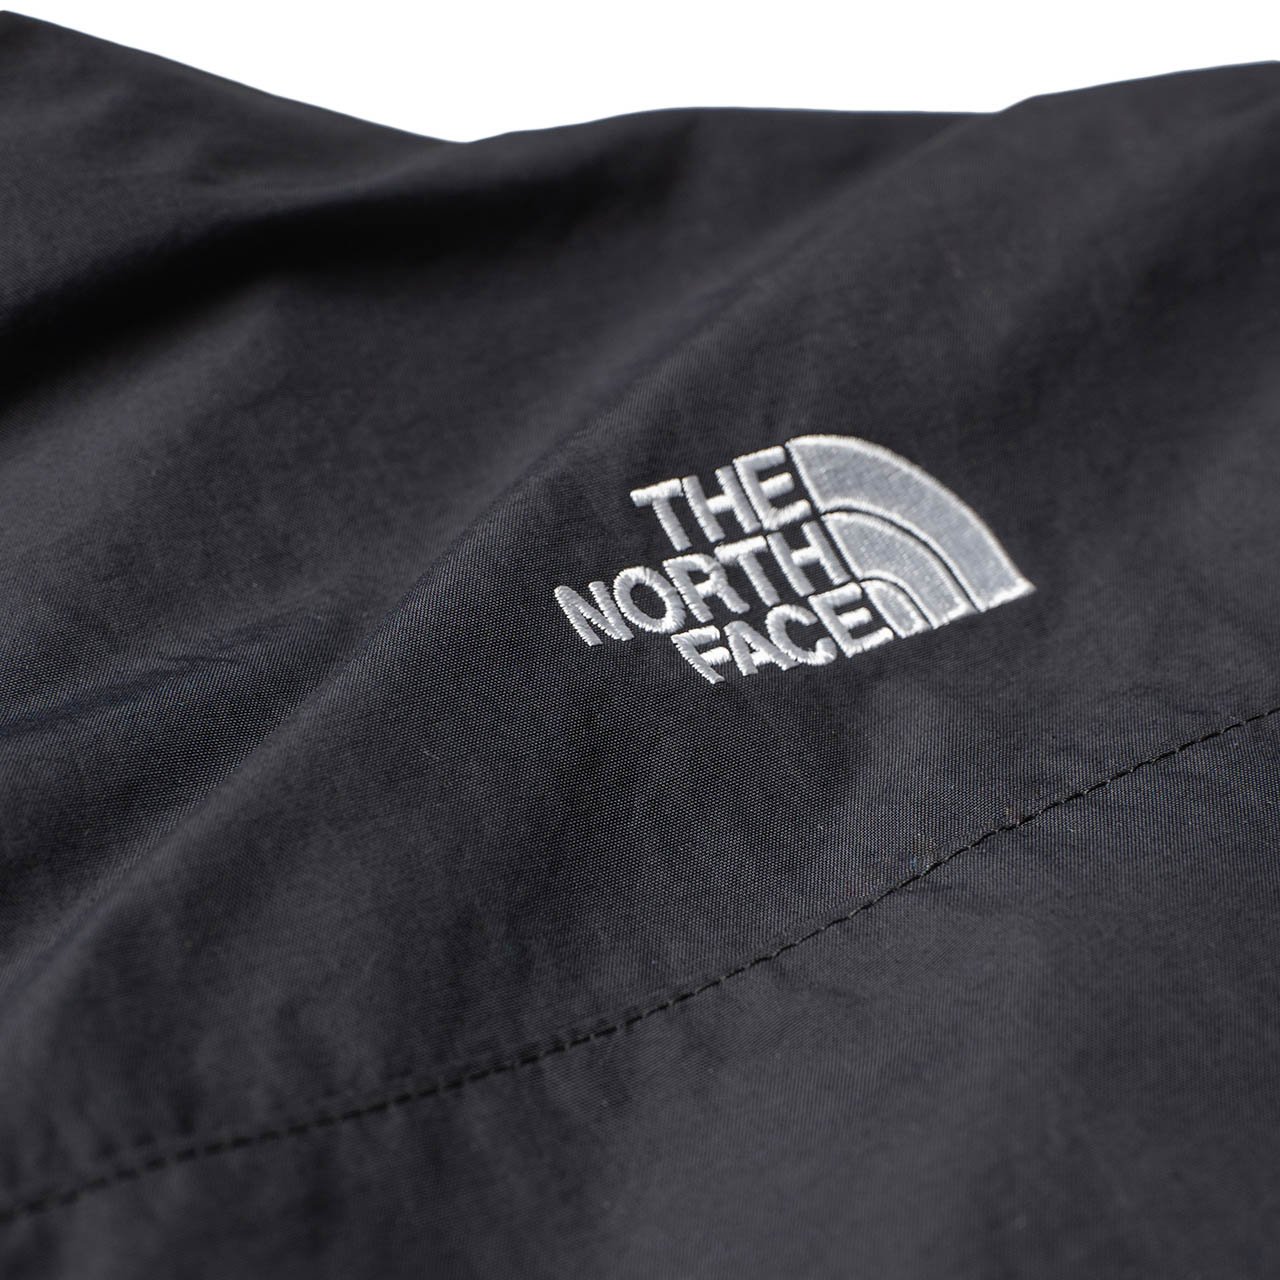 the north face black series kk coach shirt (black) - t93vq8jk3 - a.plus - Image - 9